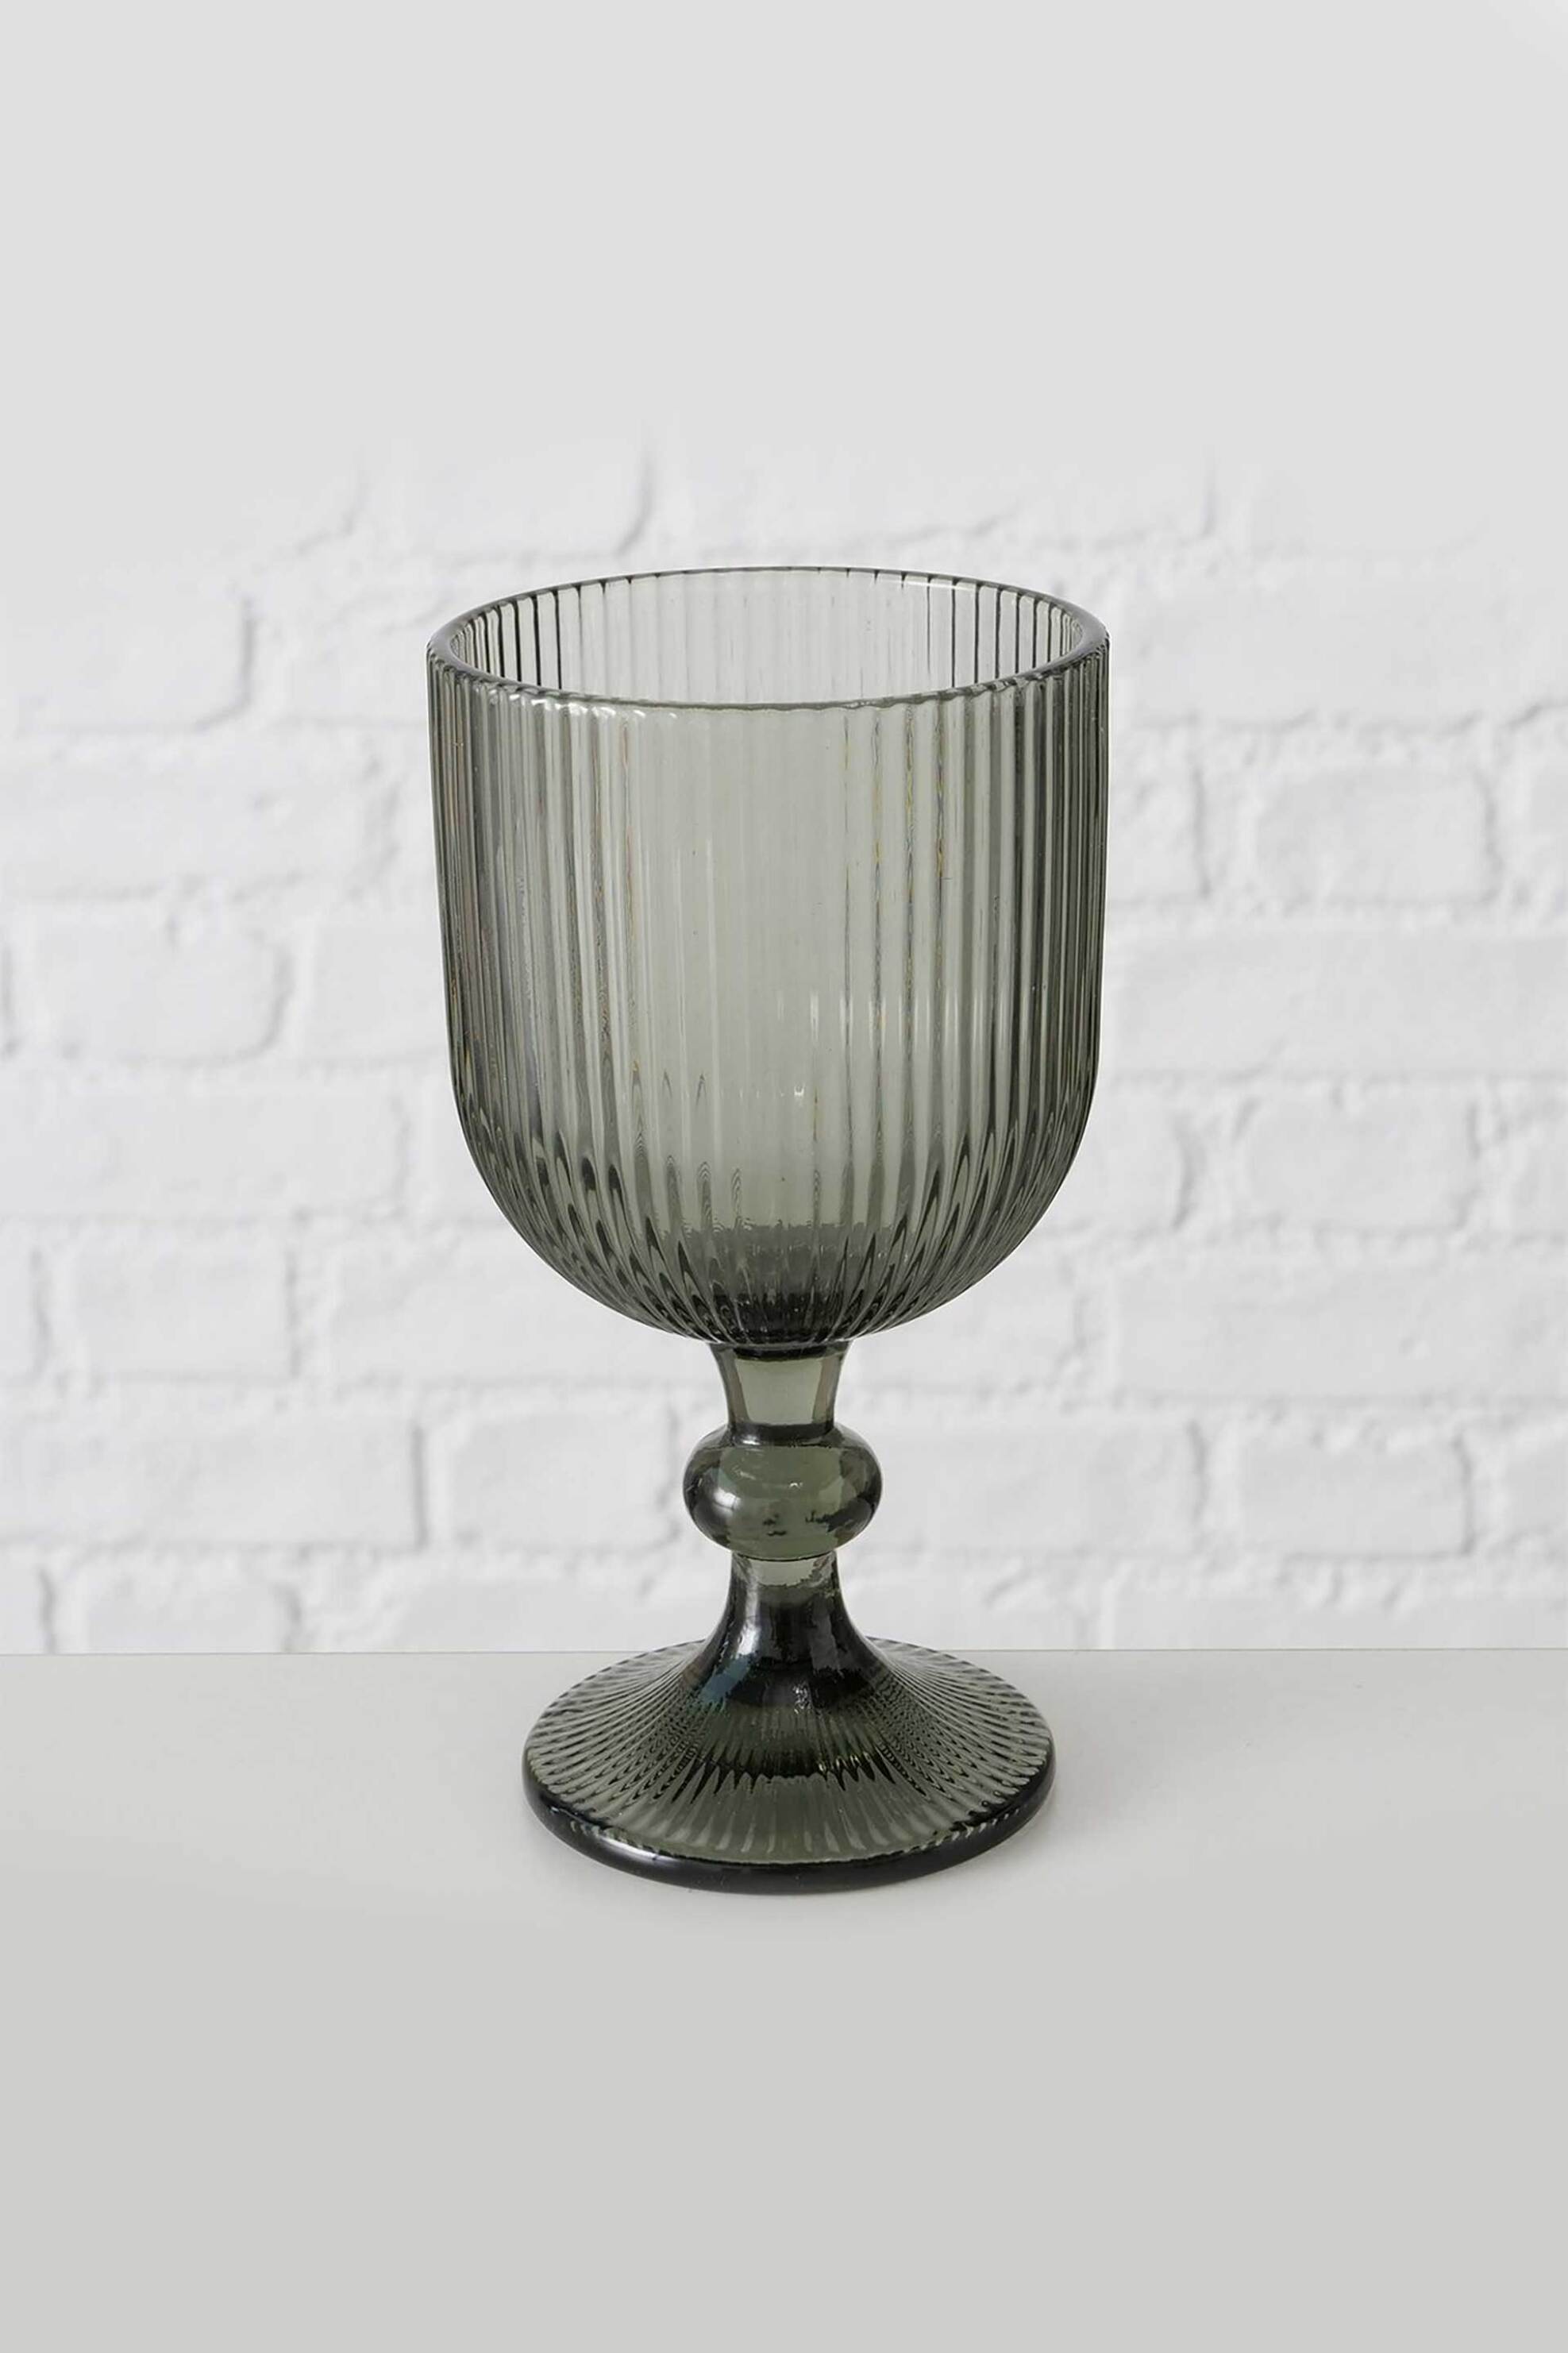 Home > ΚΟΥΖΙΝΑ > Υαλικά > Ποτήρια DOMUS HOMUS γυάλινο ποτήρι κρασιού "Rigano" 16 x 9 cm γκρι - 20-25-070